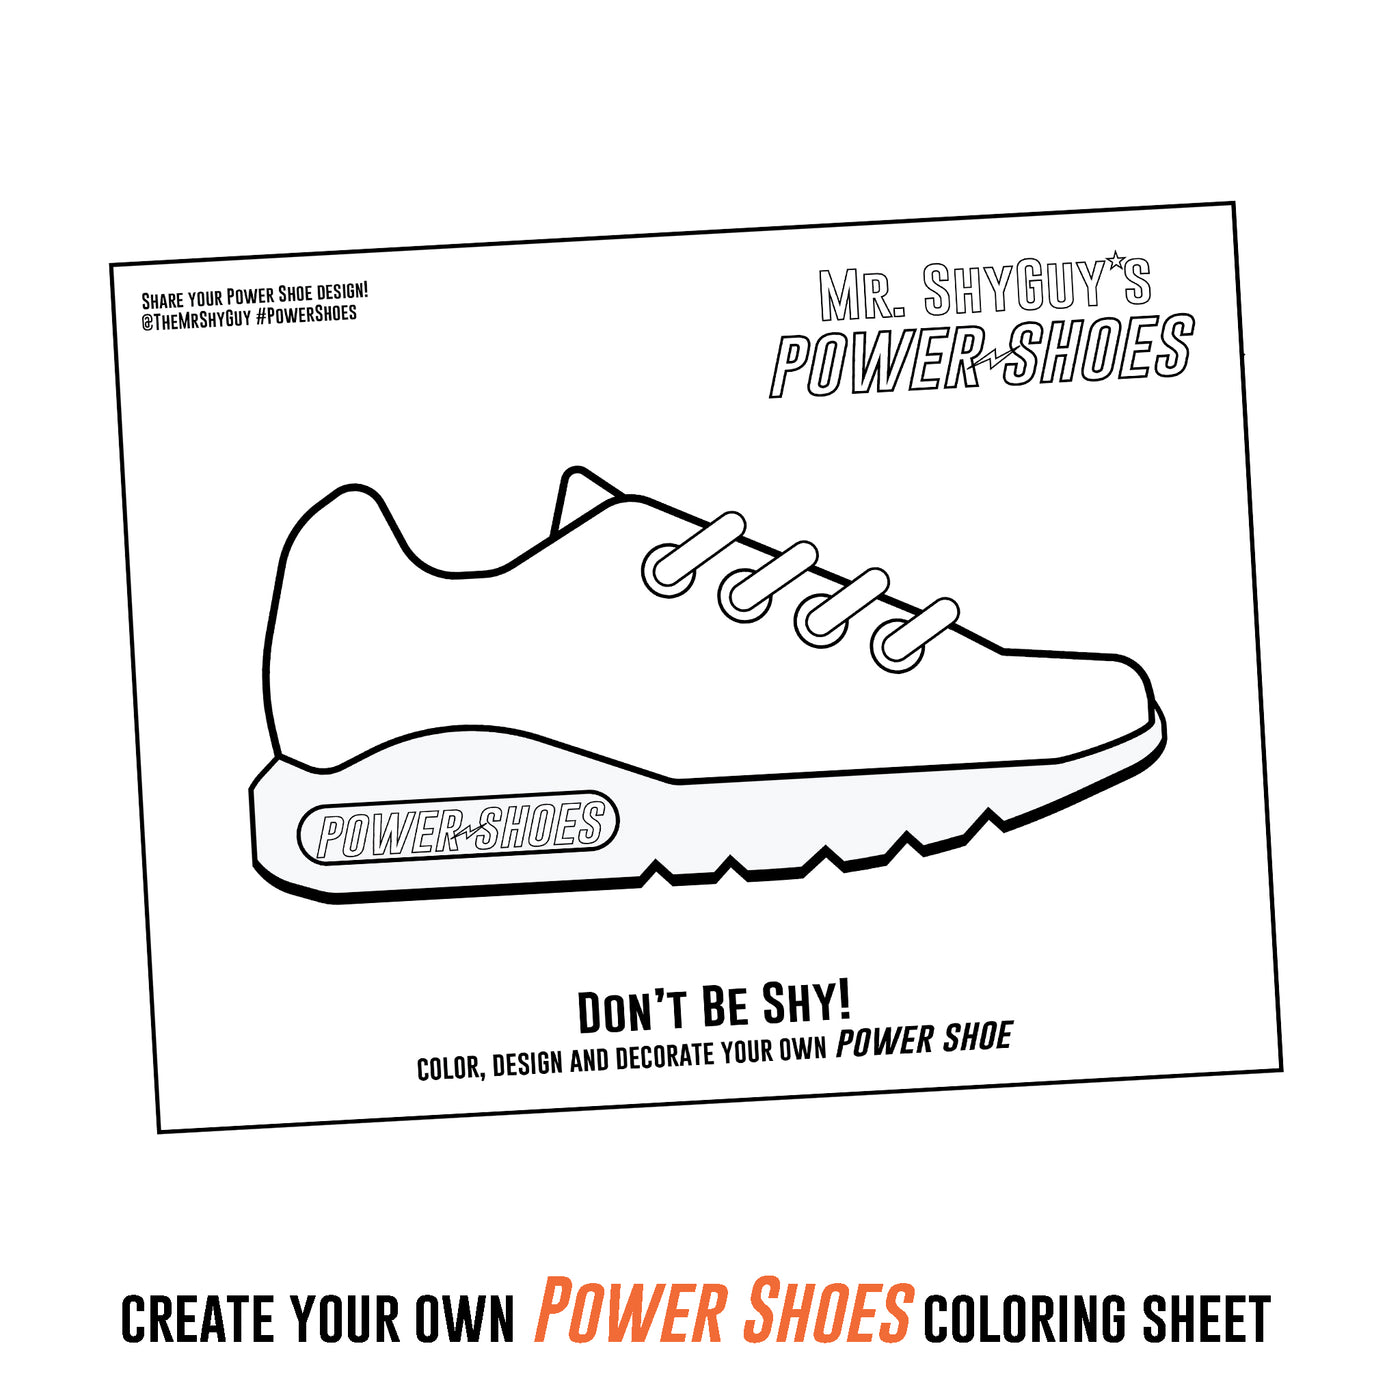 Own Power Shoe Sheet – Mr. ShyGuy's Power Shoes